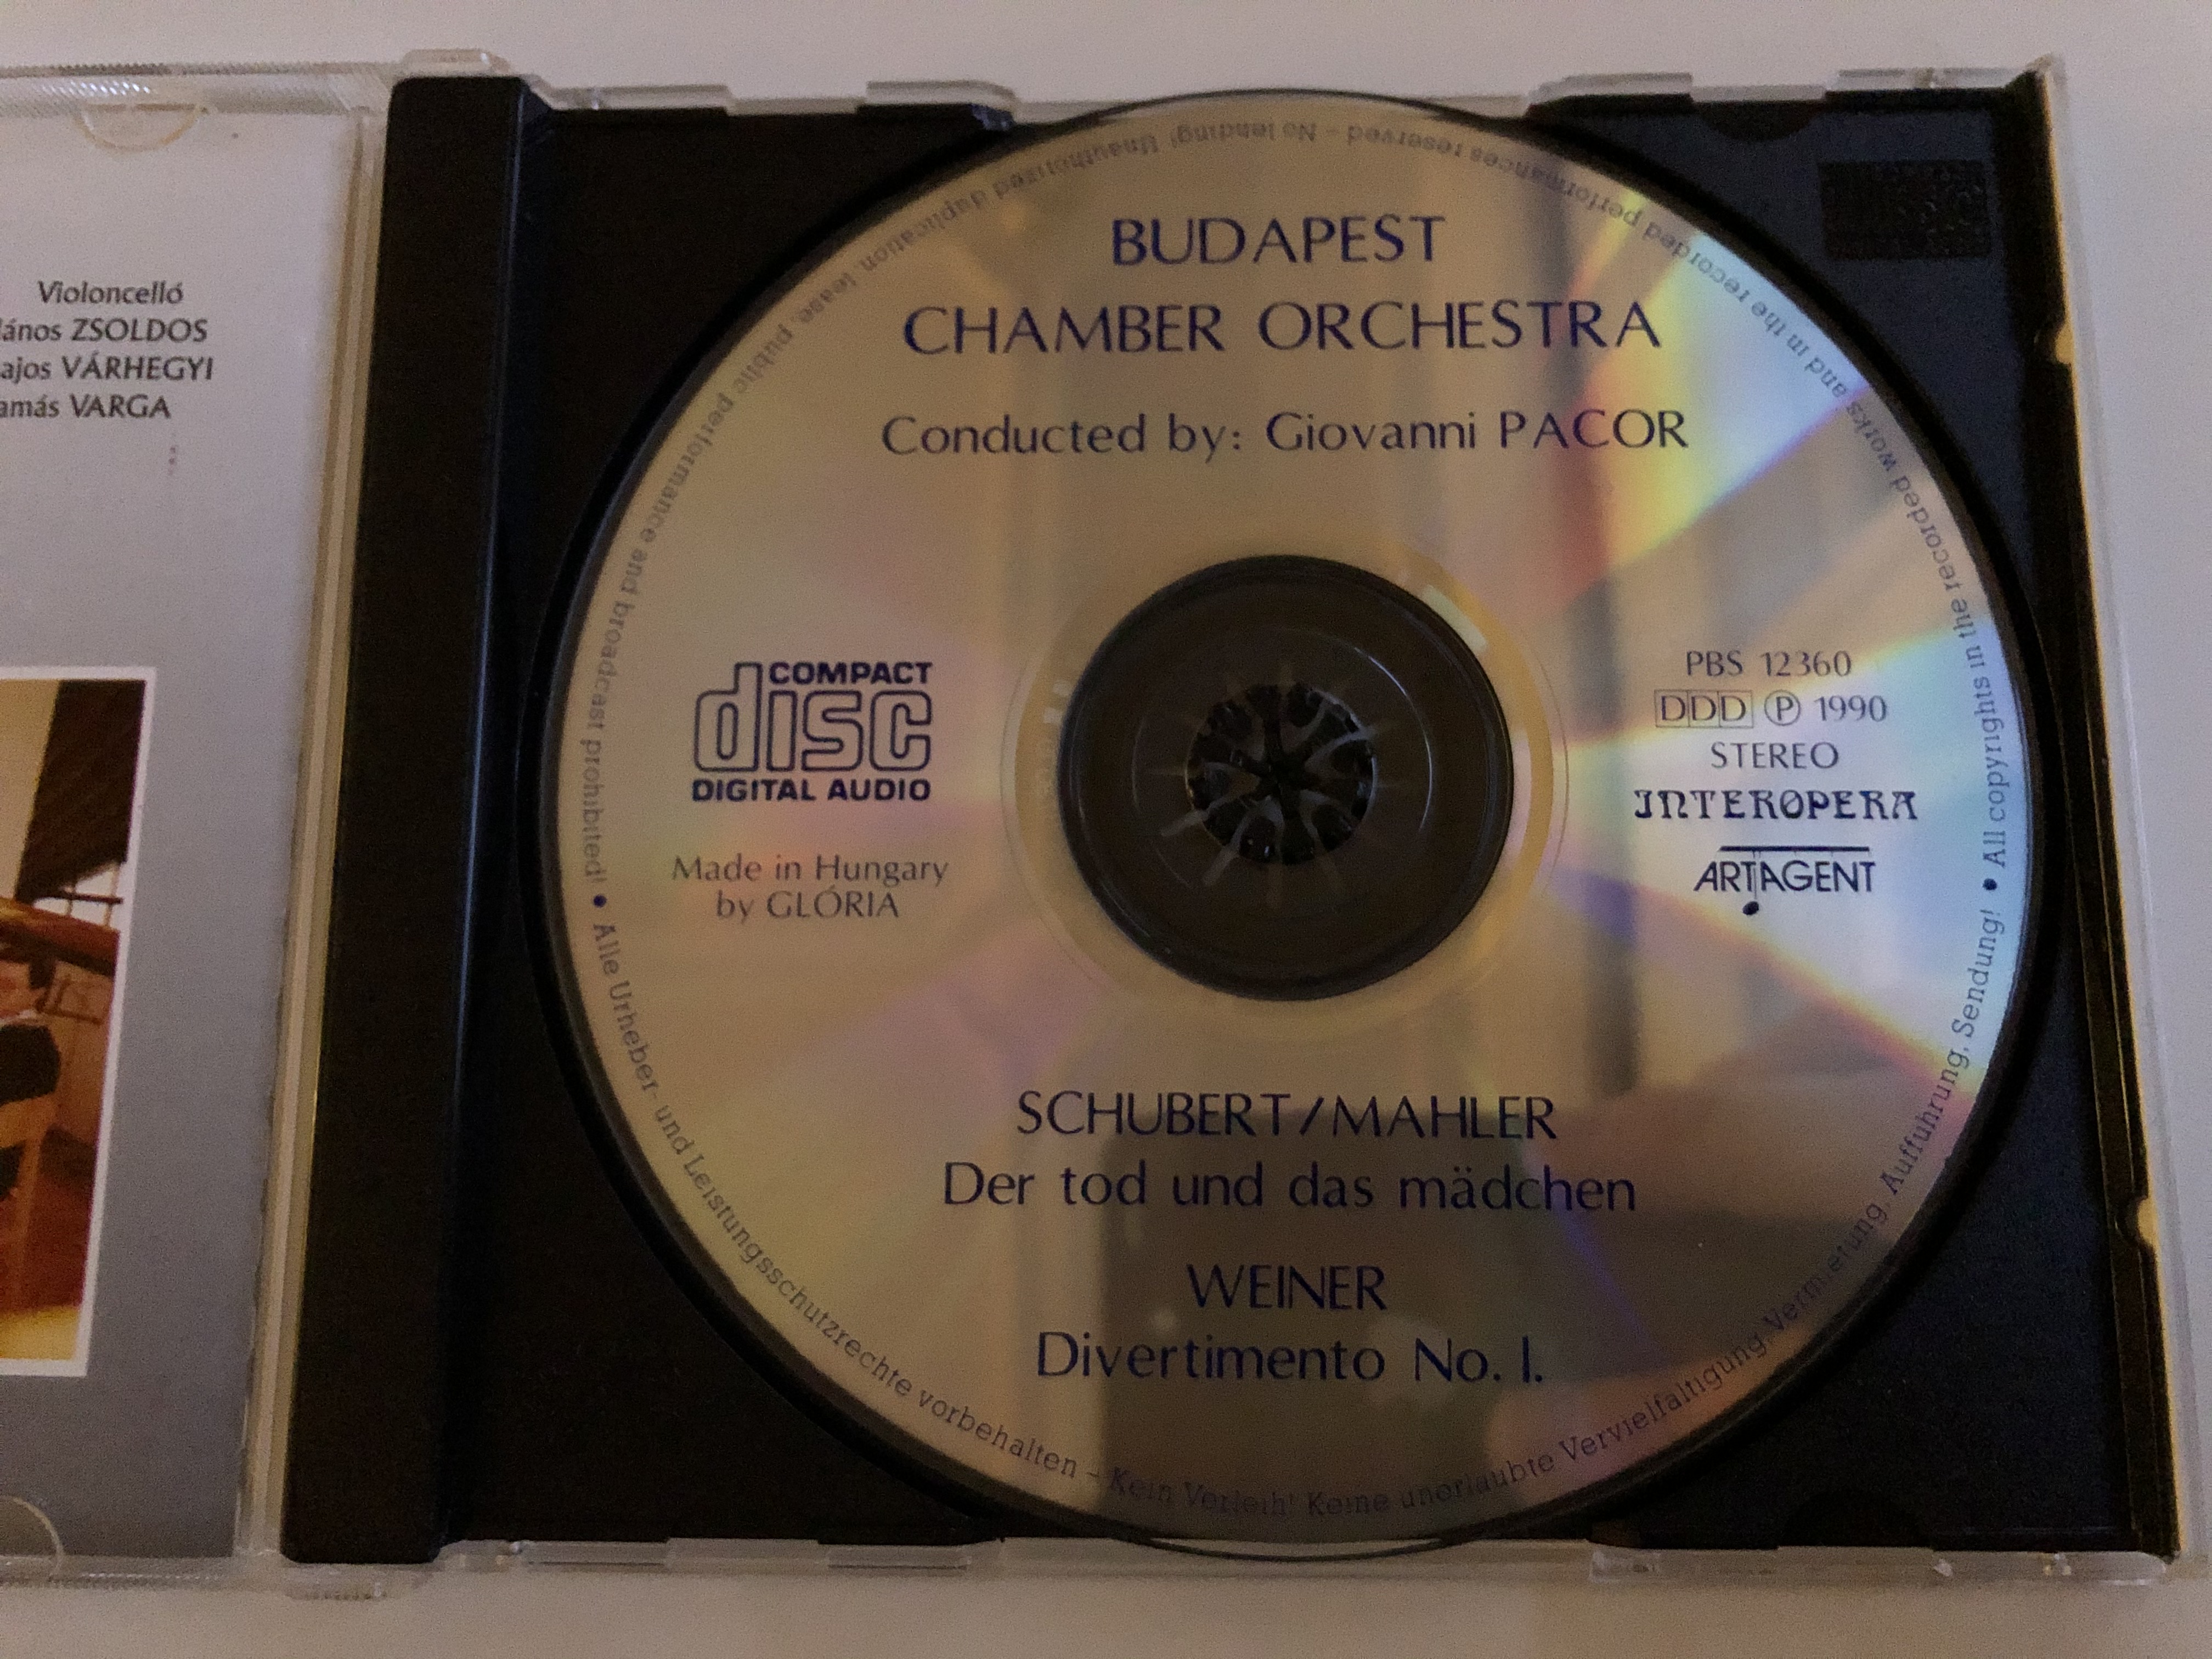 schubert-mahler-der-tod-und-das-madchen-leo-weiner-divertimento-no.-1.-budapest-chamber-orchestra-conducted-giovanni-pacor-gloria-audio-cd-1990-stereo-pbs-12360-5-.jpg